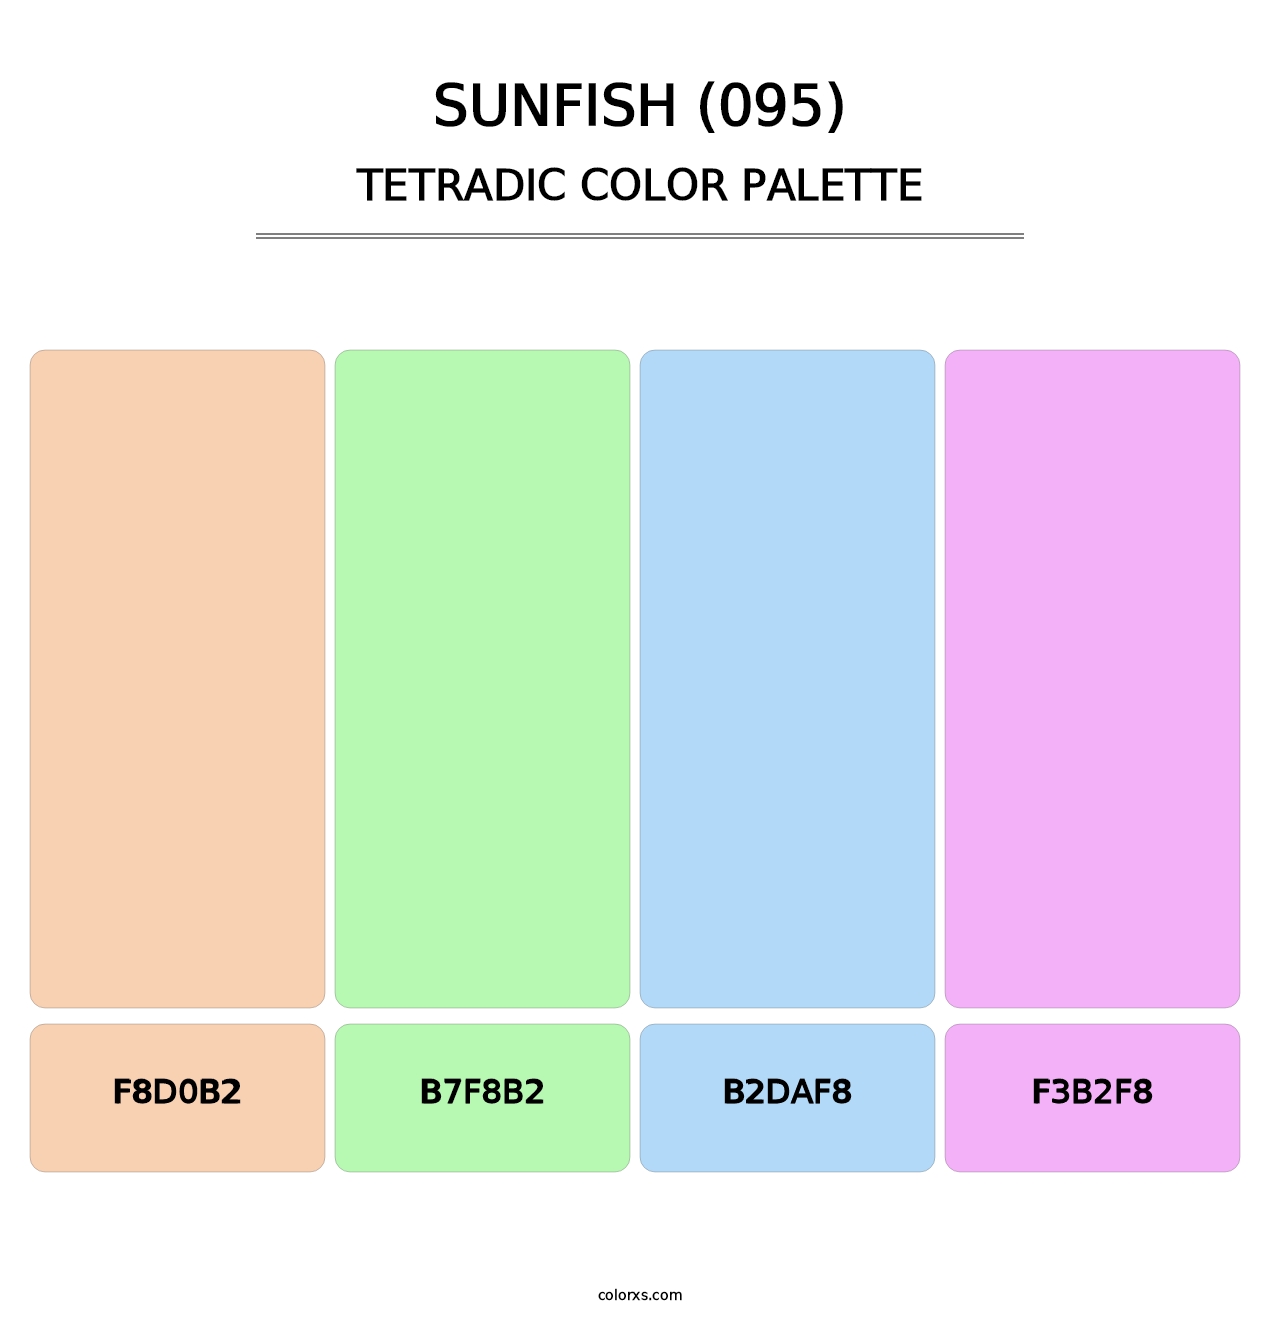 Sunfish (095) - Tetradic Color Palette